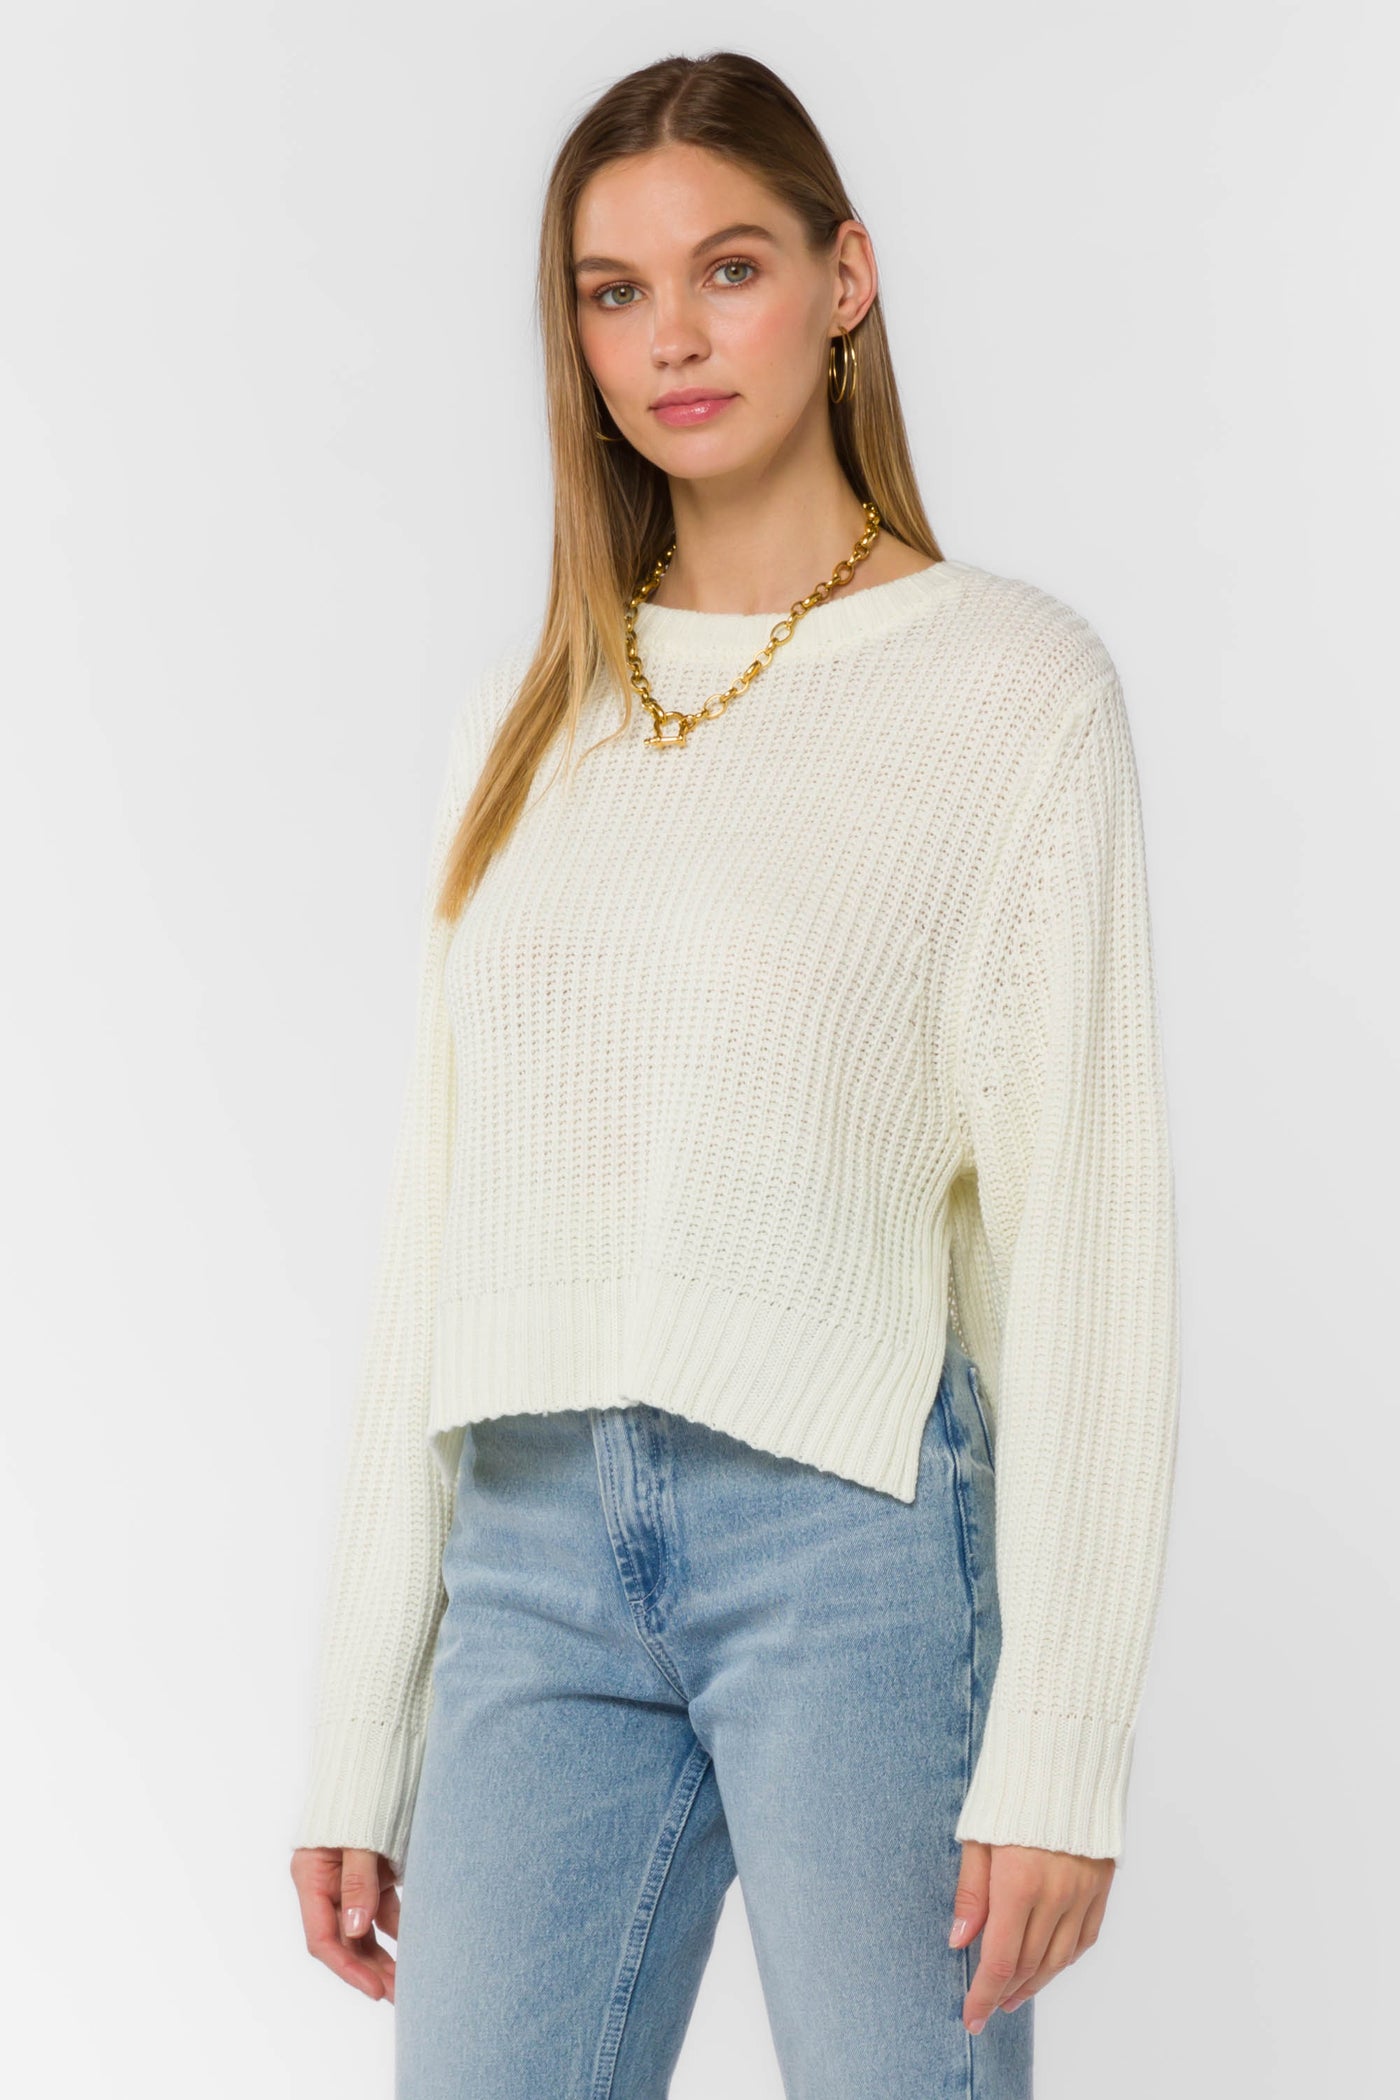 Korina Ivory Sweater - Sweaters - Velvet Heart Clothing